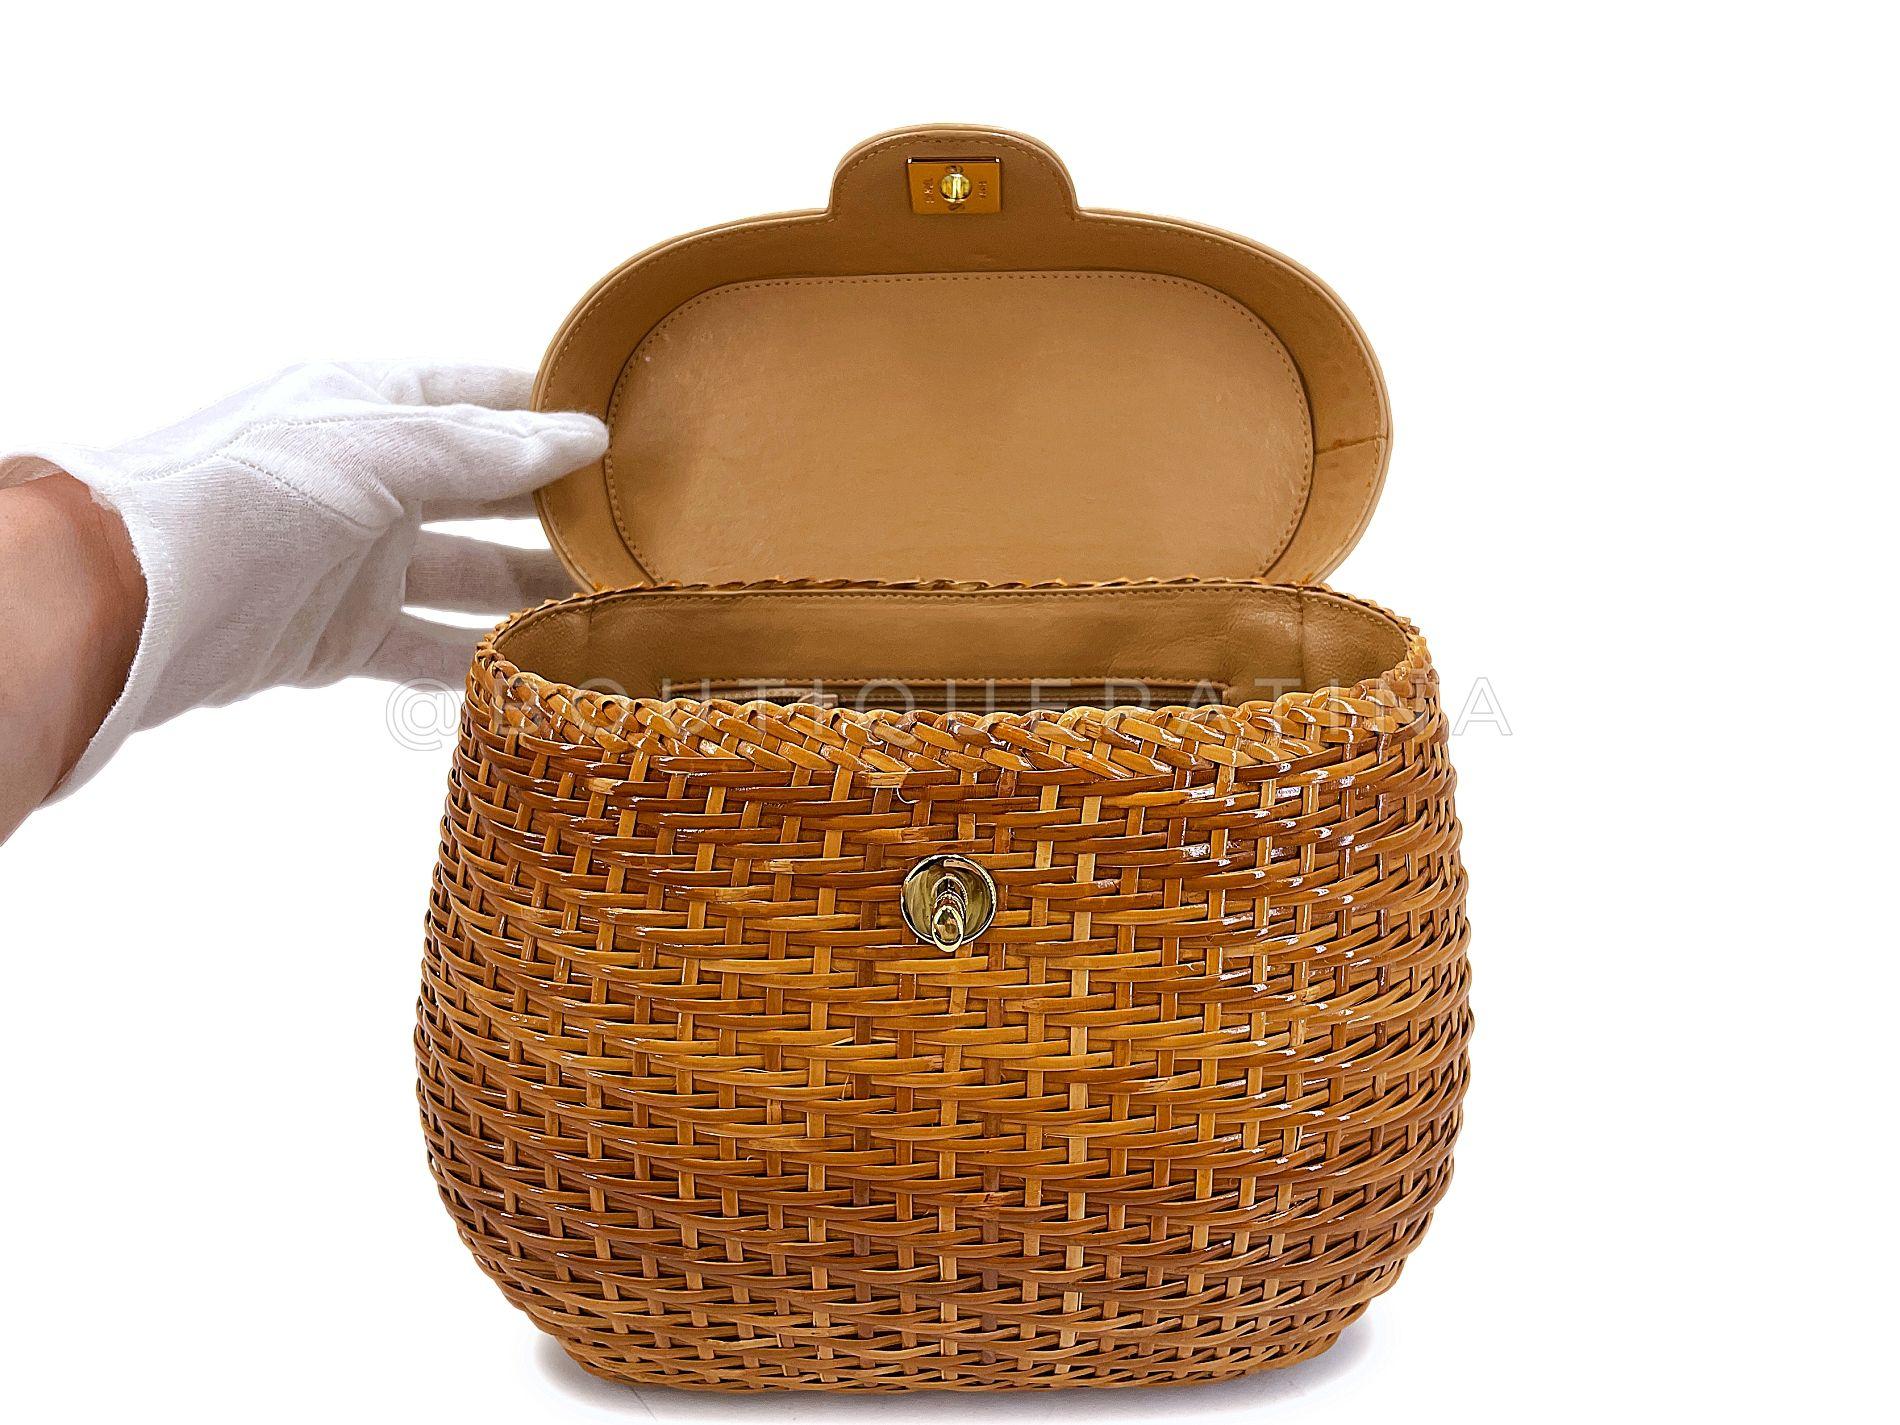 Chanel 1997 Vintage Wicker and Beige Lambskin Basket Vanity Bag 67876 For Sale 5